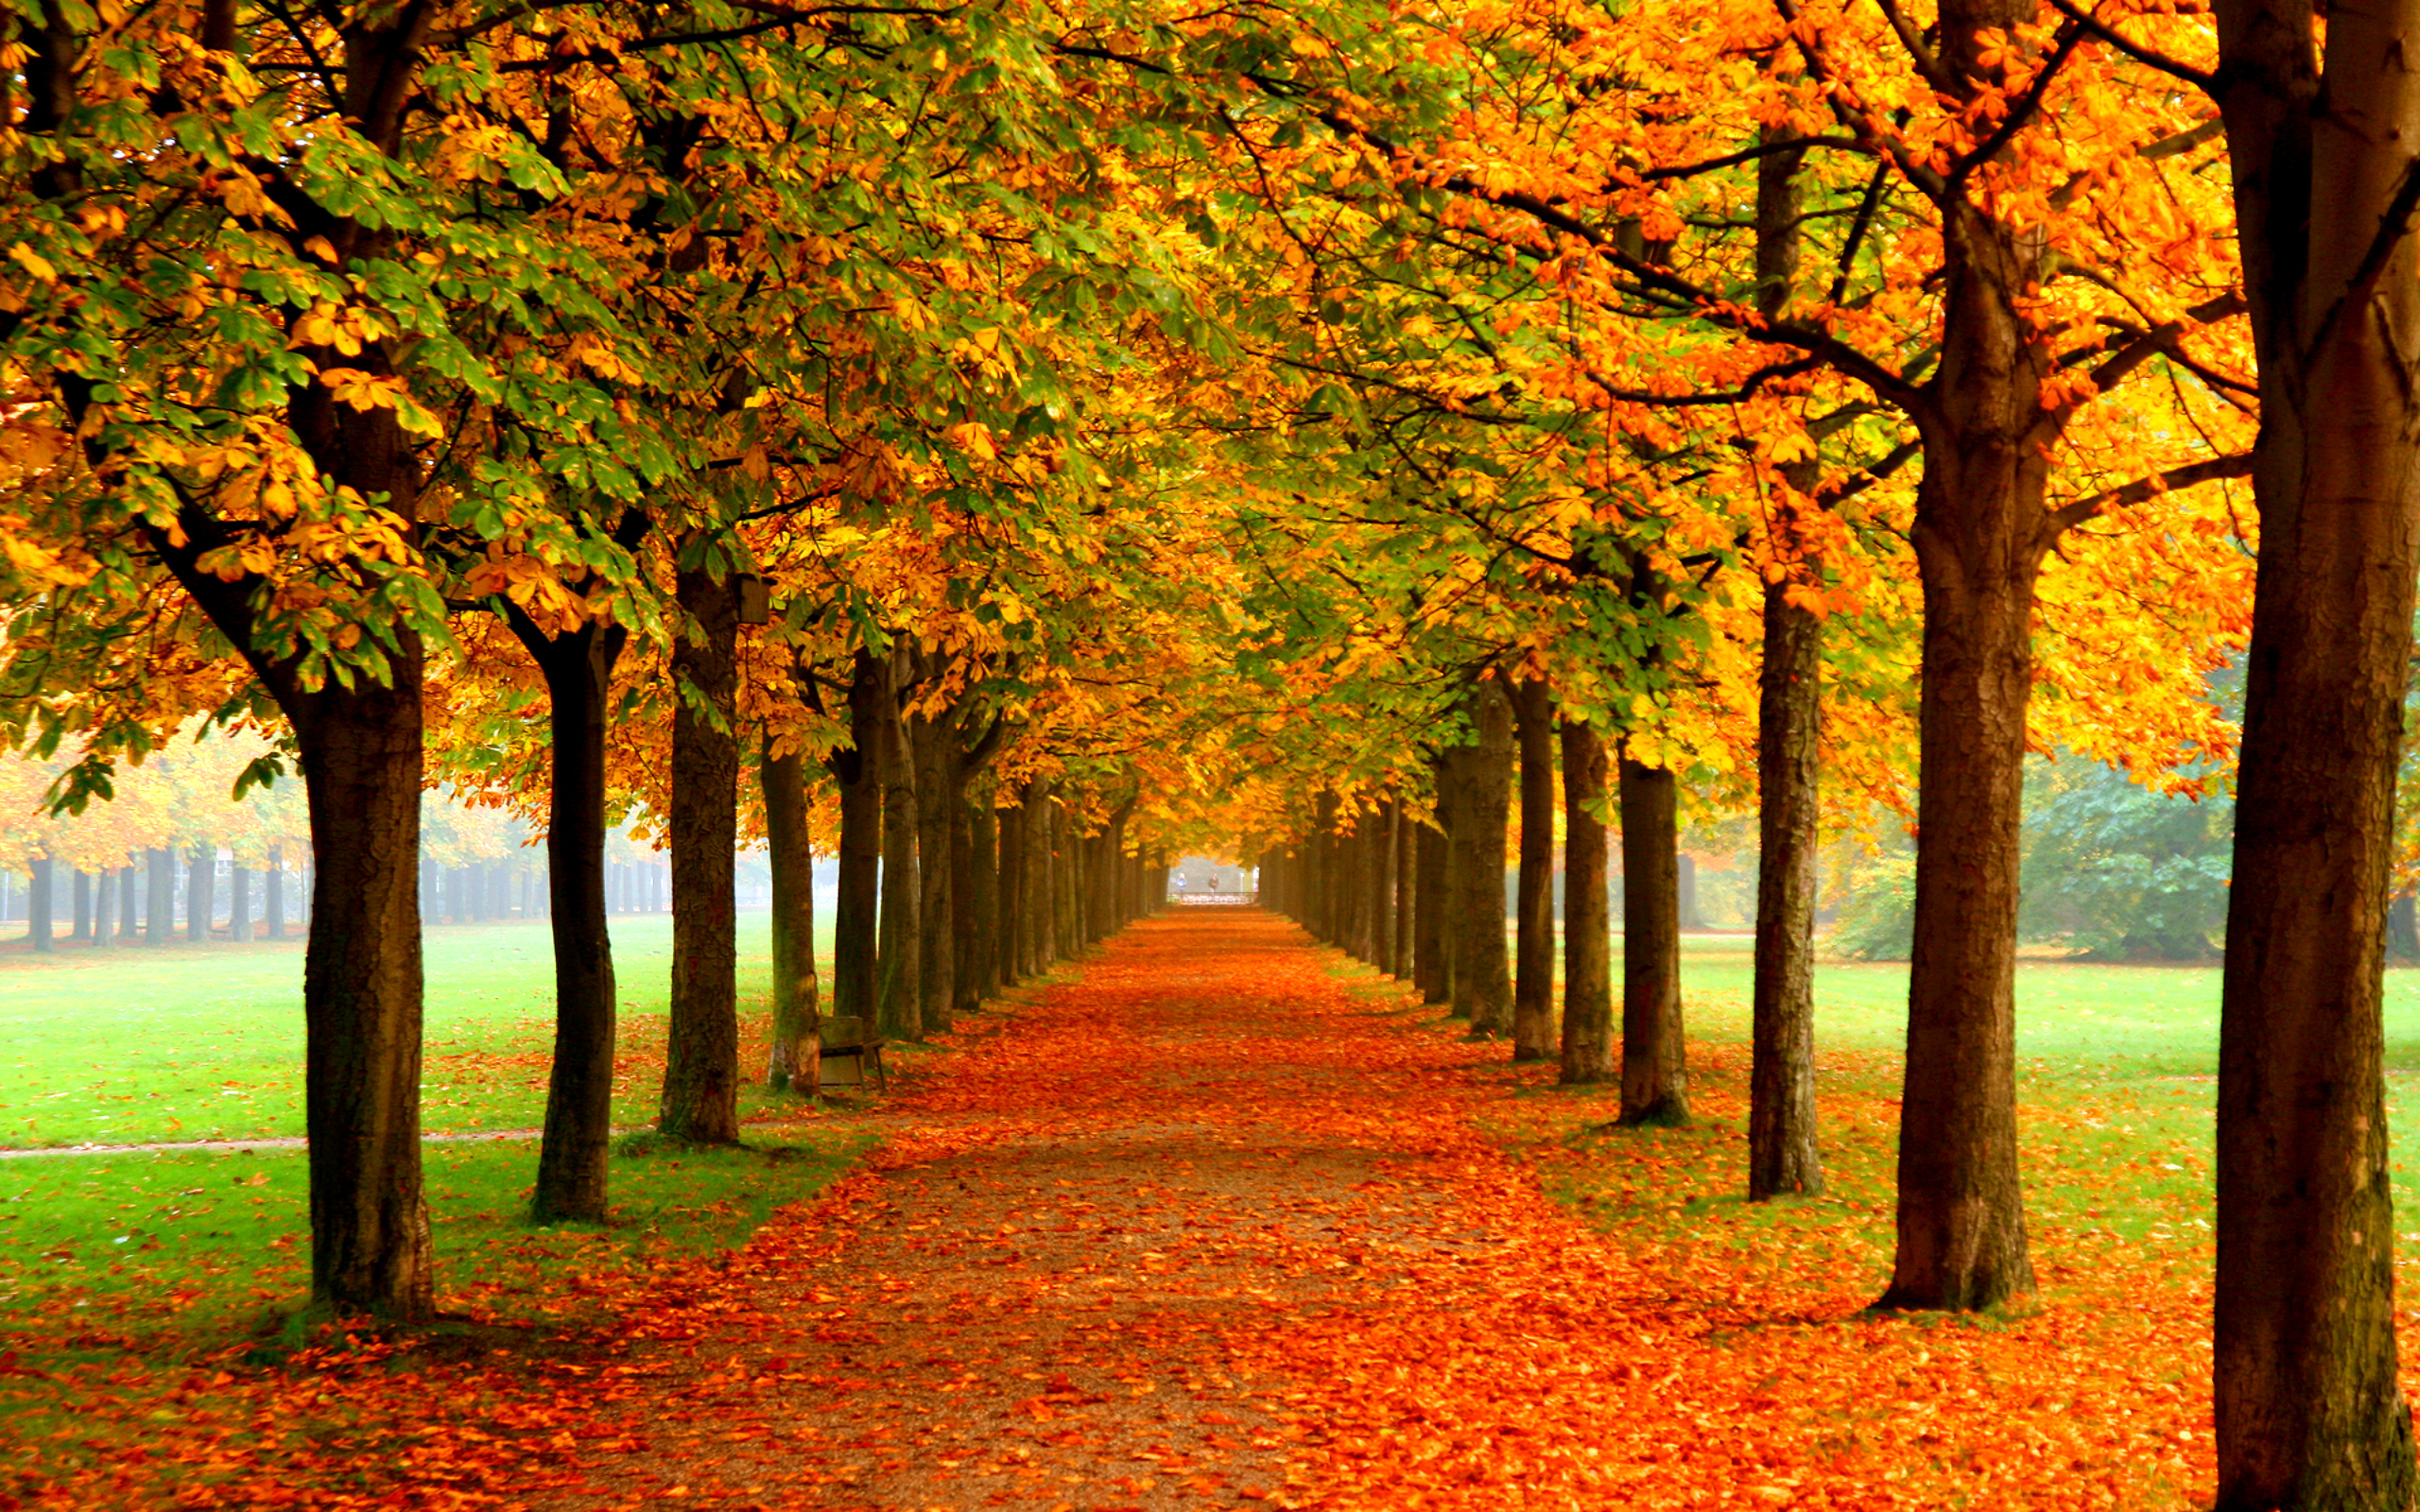  URL httpmi9comautumn free wallpaper autumn colors 93076html